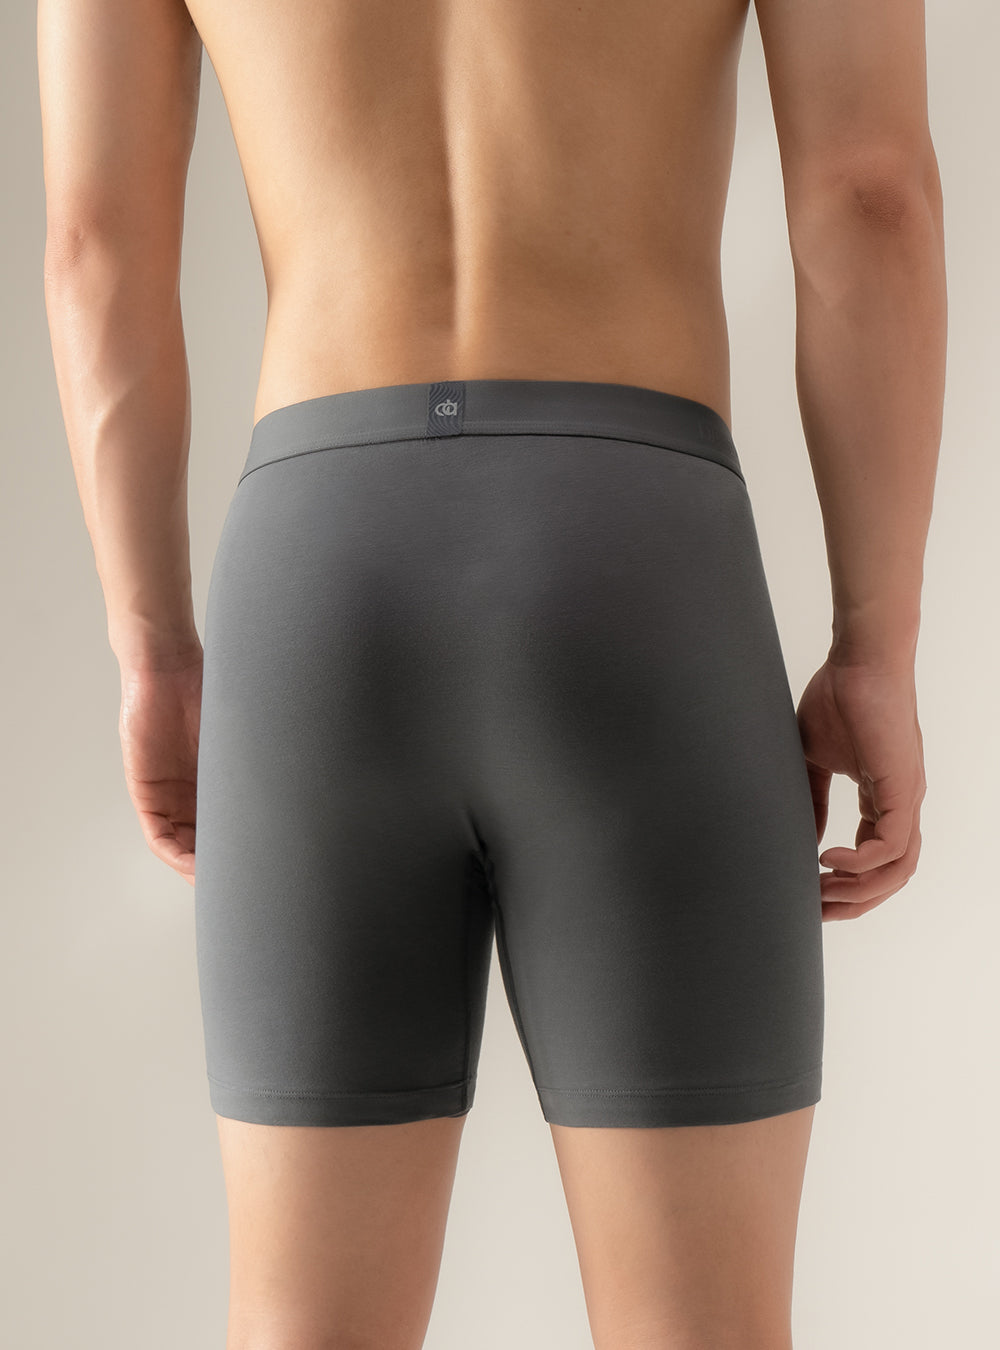 David Archy 3 Packs Super Soft Cotton Boxer Briefs Natural and Skin-Friendly  Men's Underwear